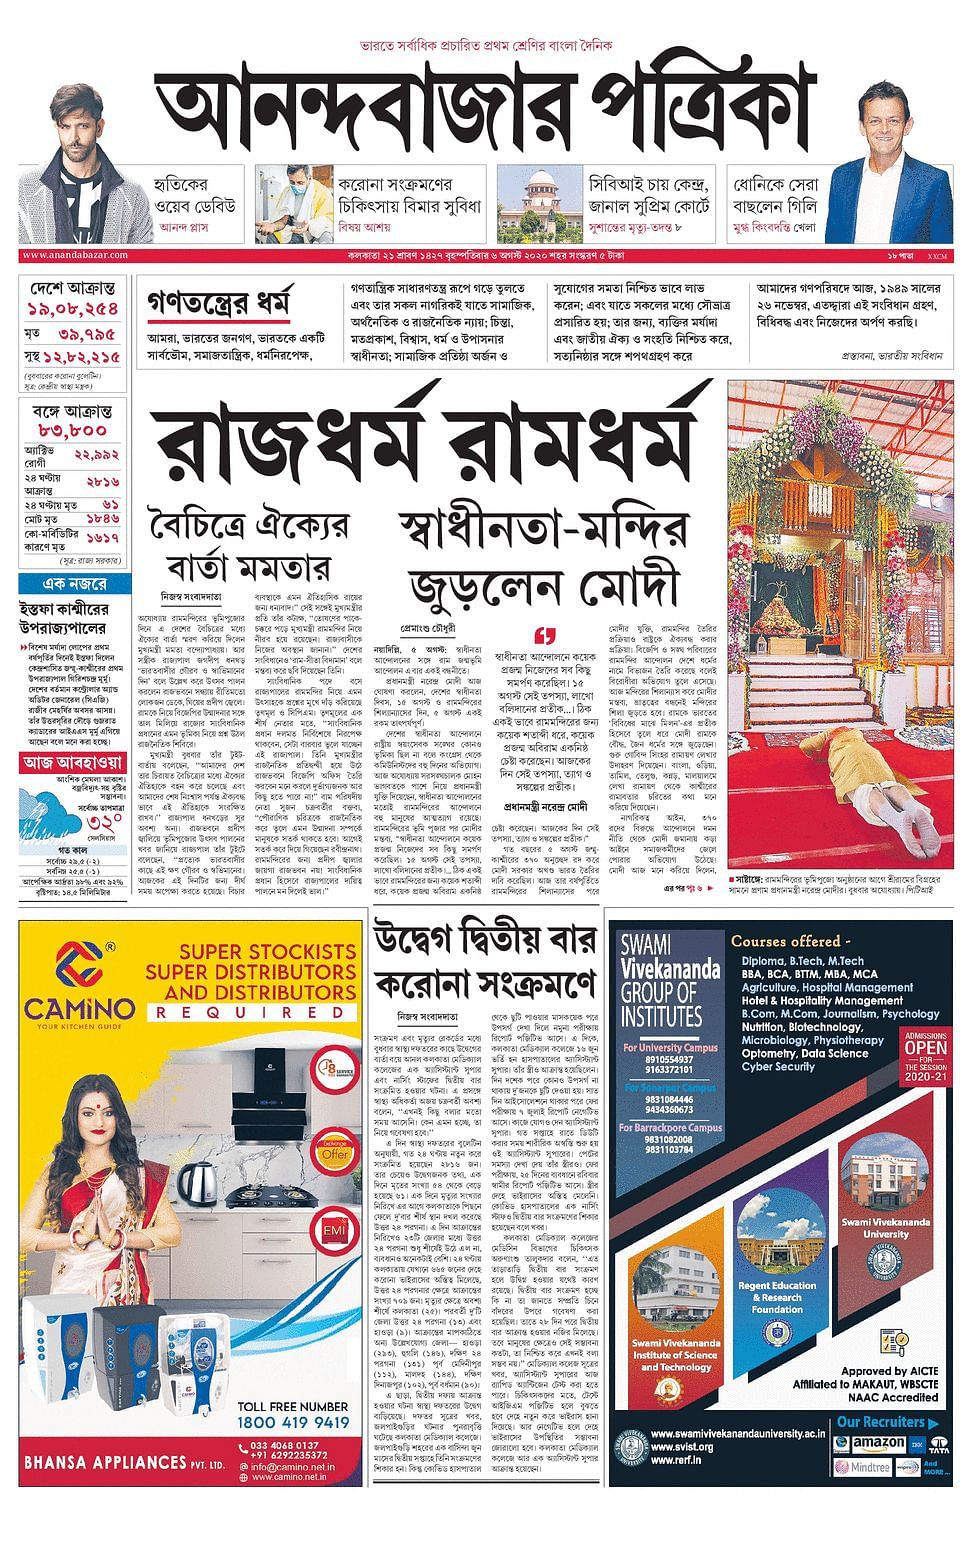 Bengali newspaper Anand Bazar says,